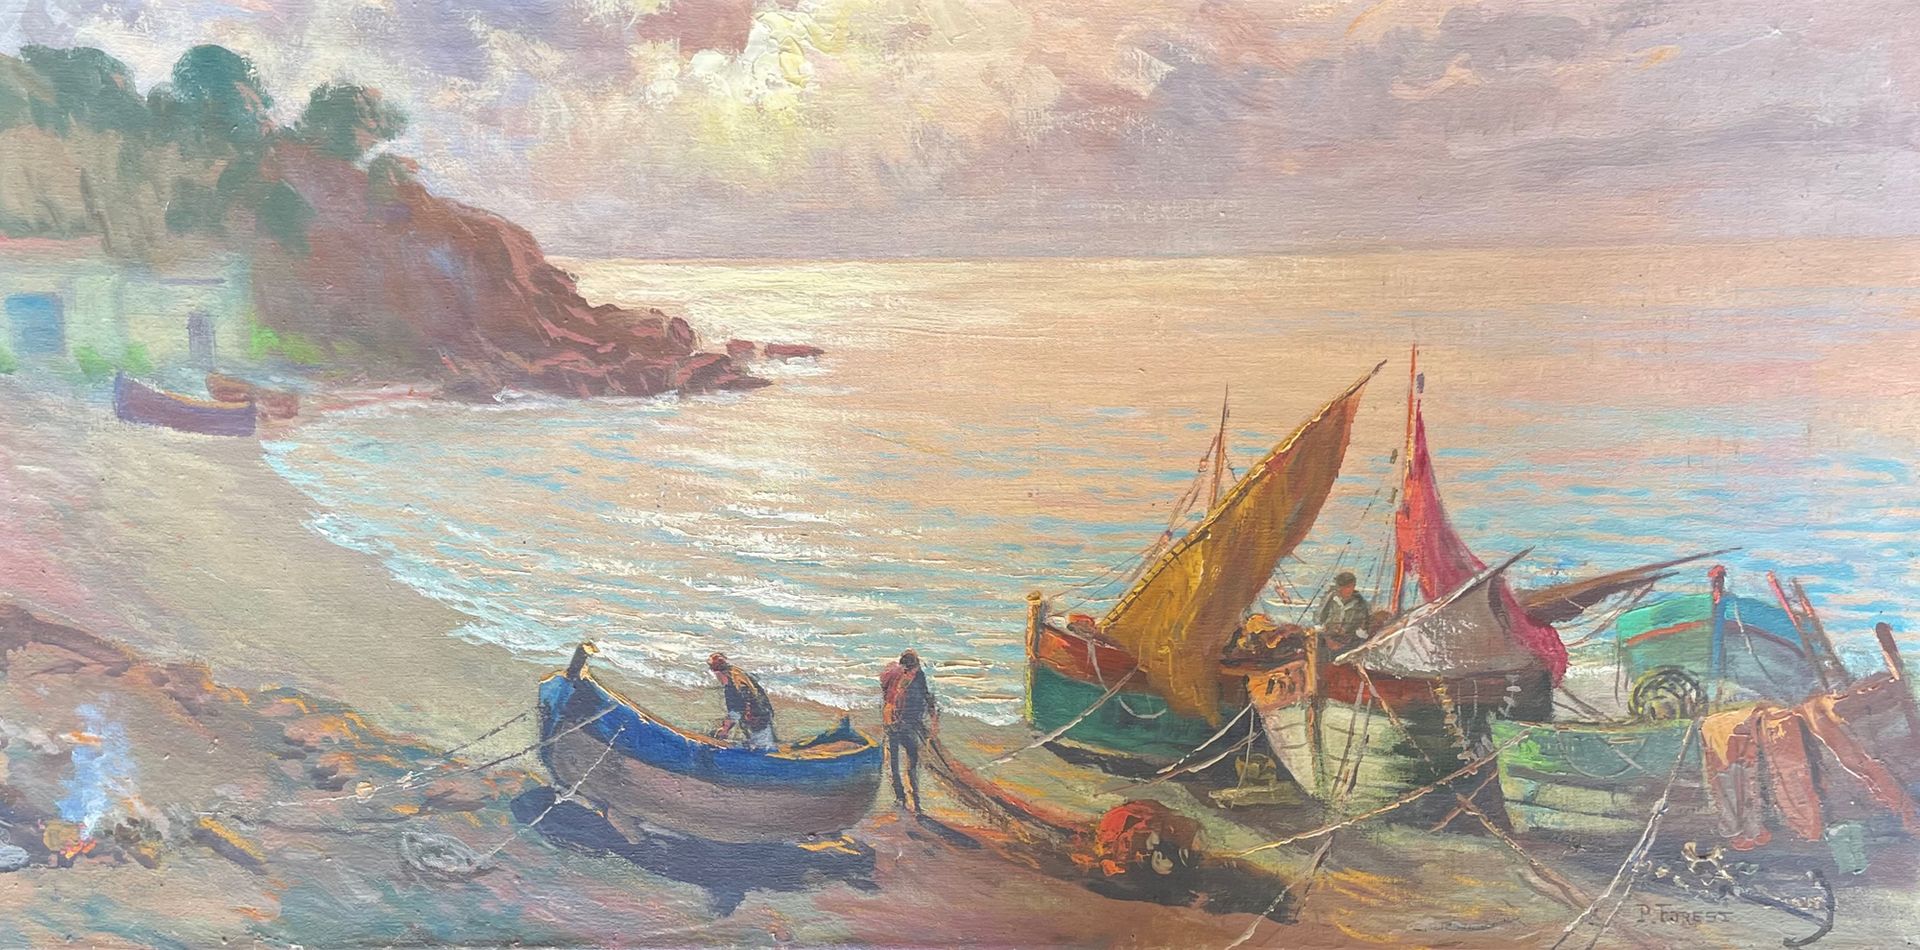 Pierre FOREST (1881-1971) 从捕鱼返回
布面油画，右下角有签名
50 x 100厘米